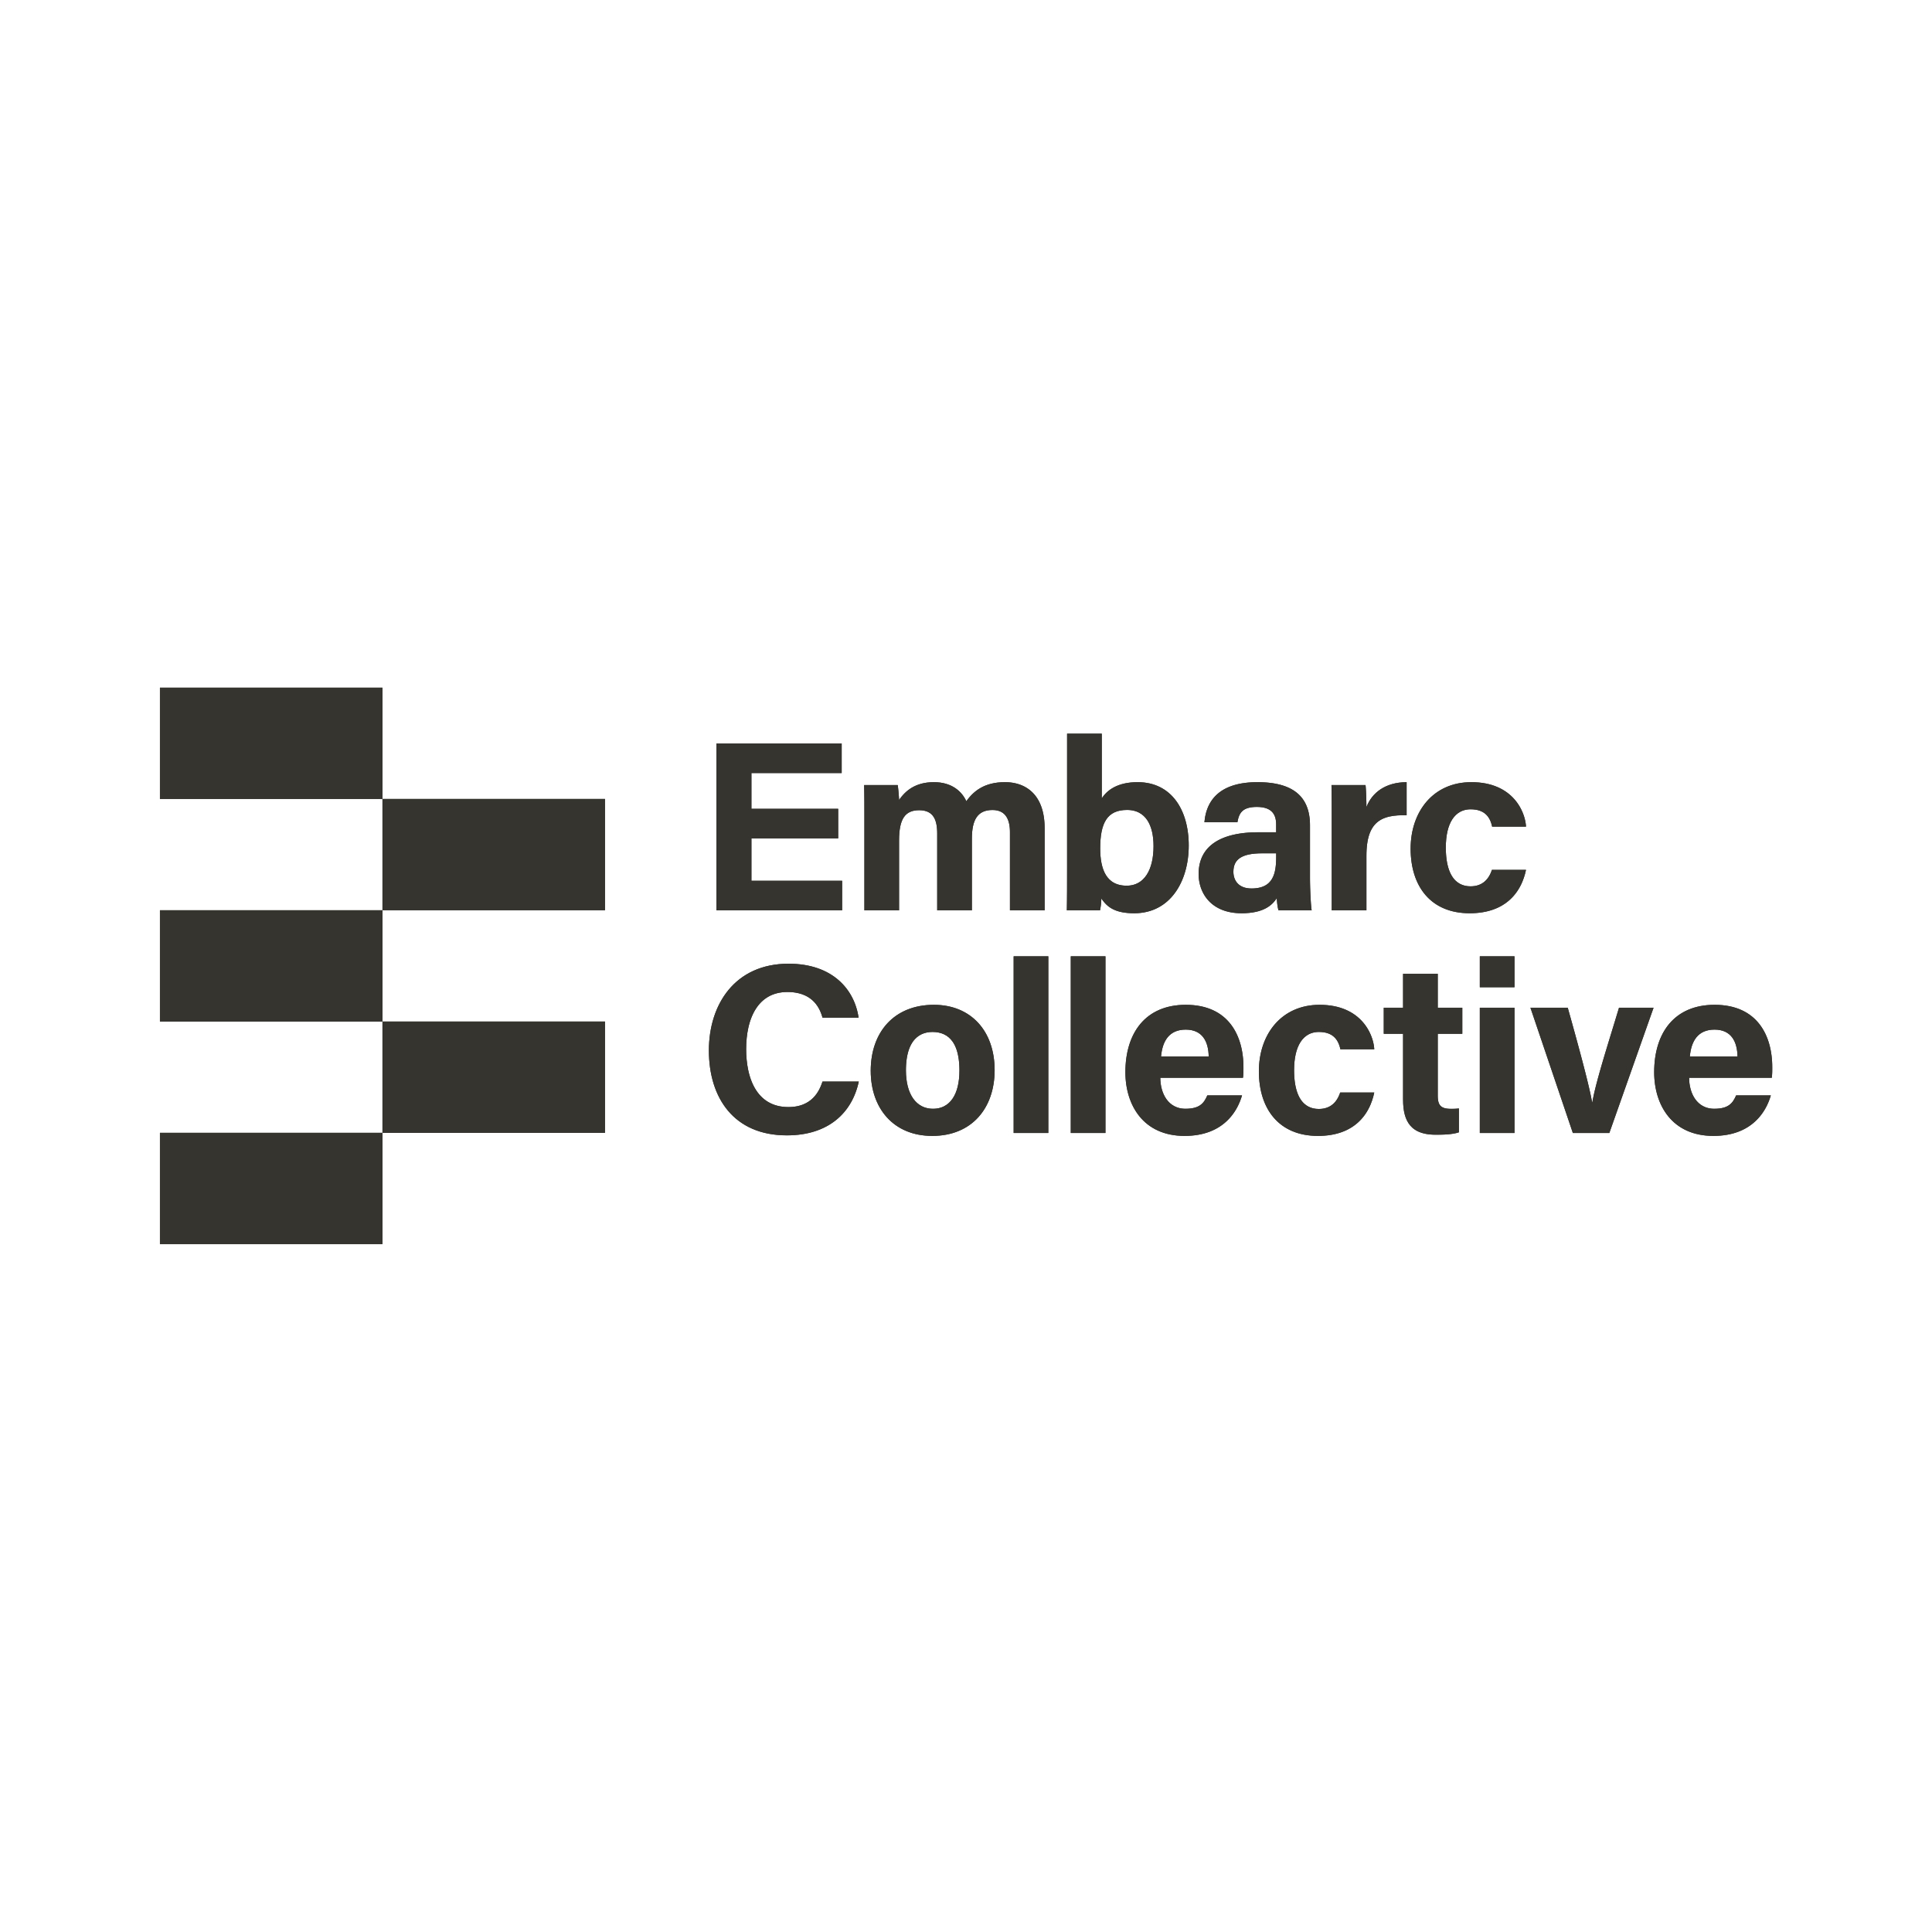 Tampa Bay Innovation Hub, dba Embarc Collective Tampa Bay logo